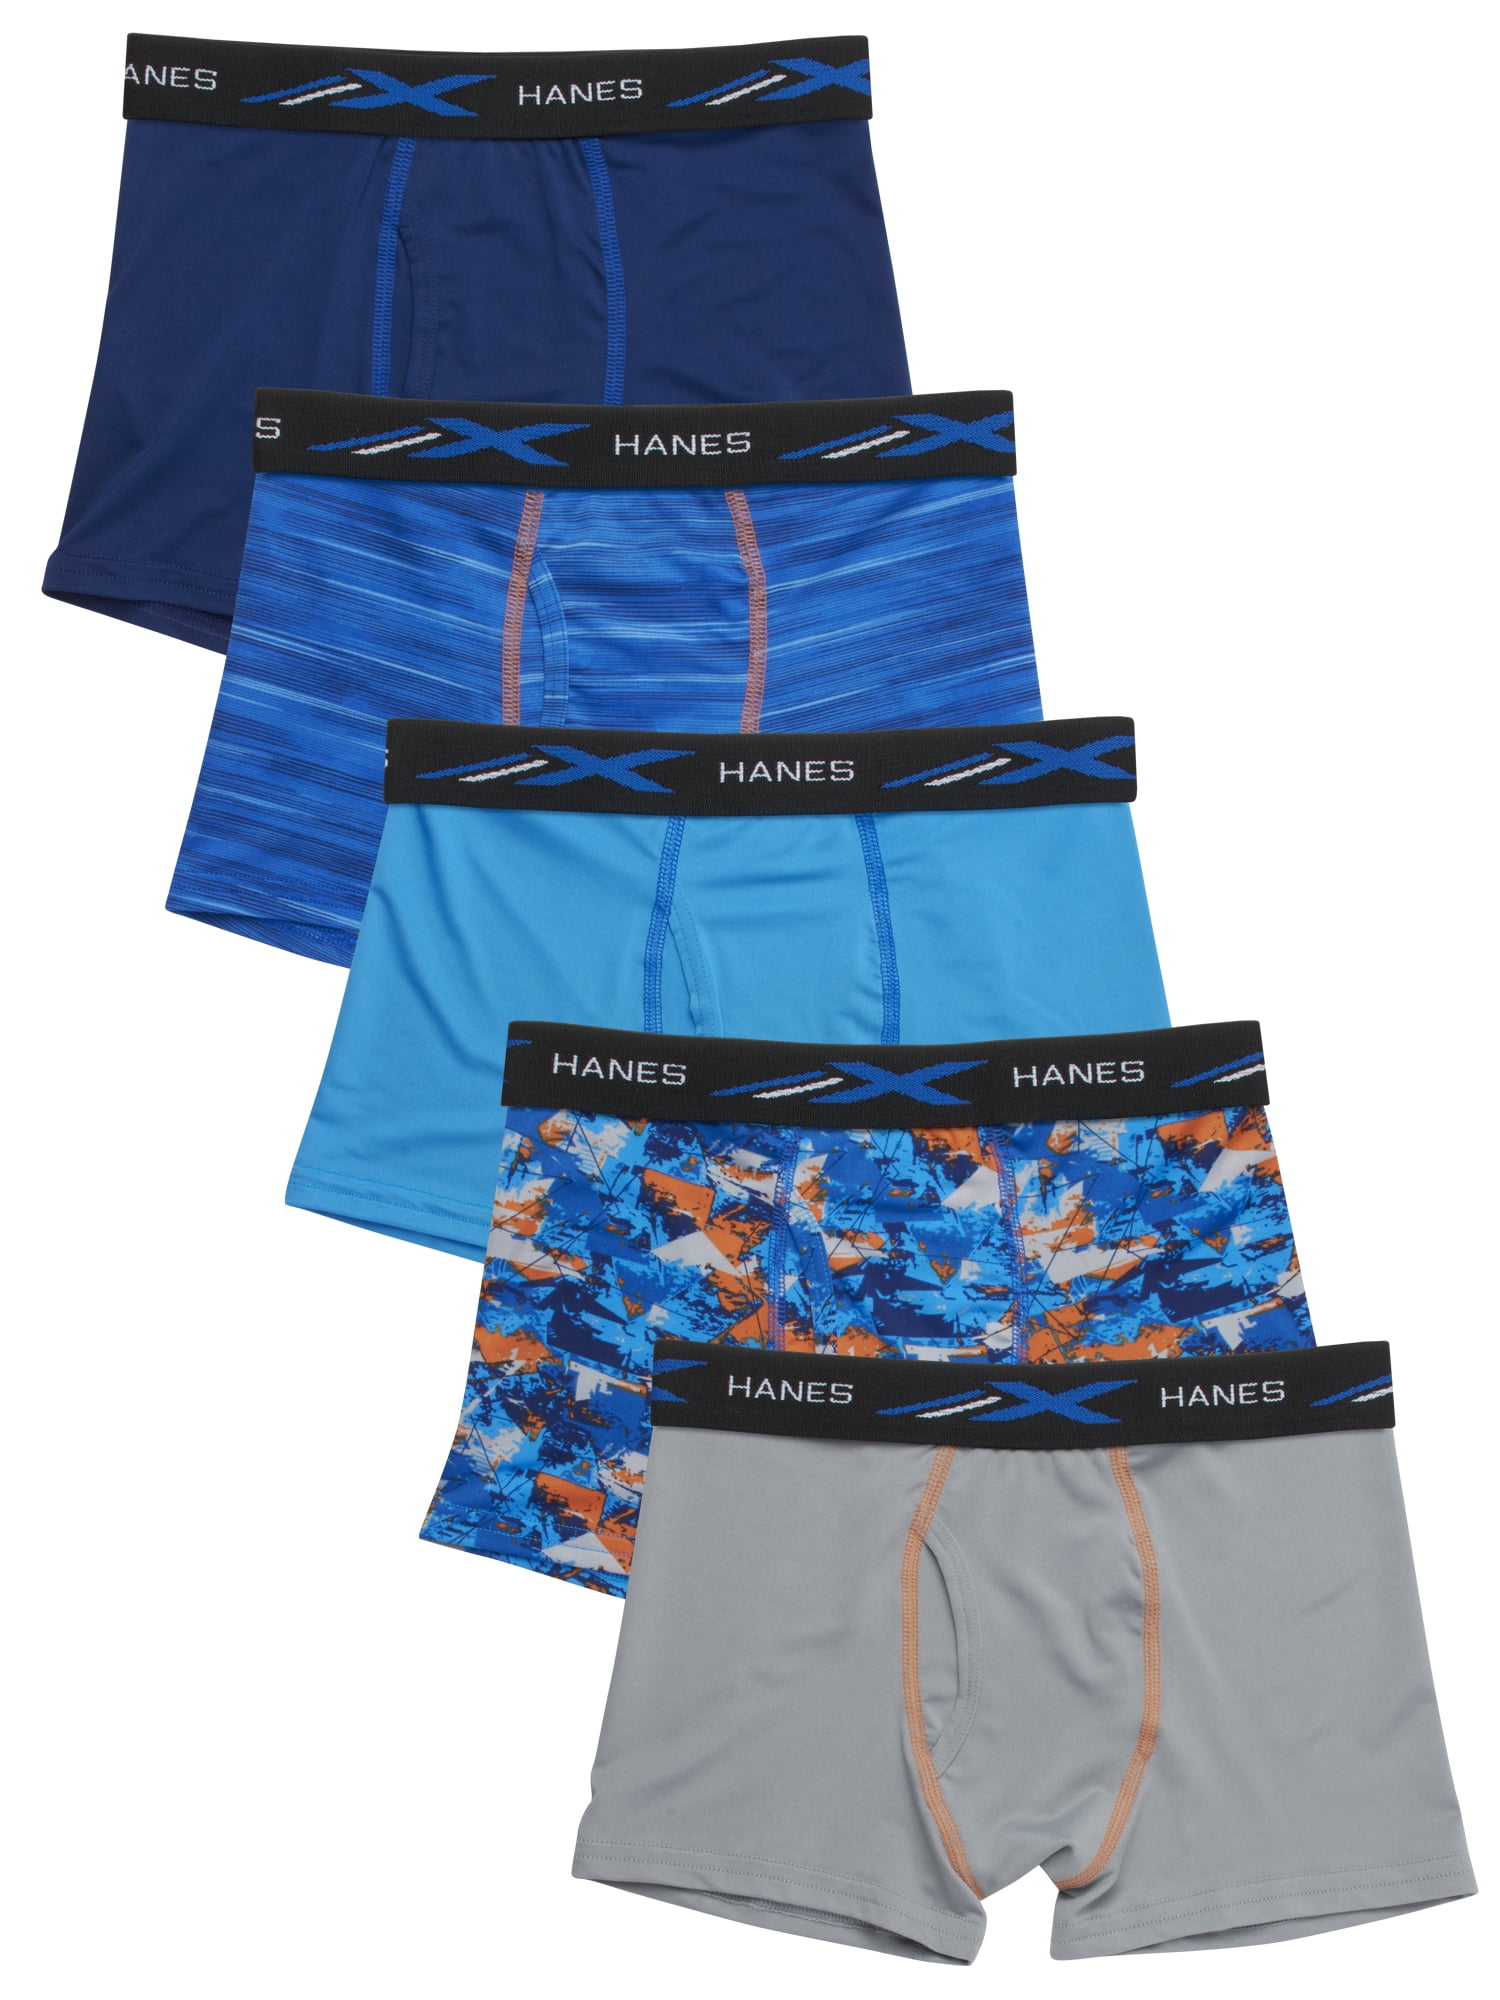 Briefs for BoysUnderwear for Summer Camp from Hanes®